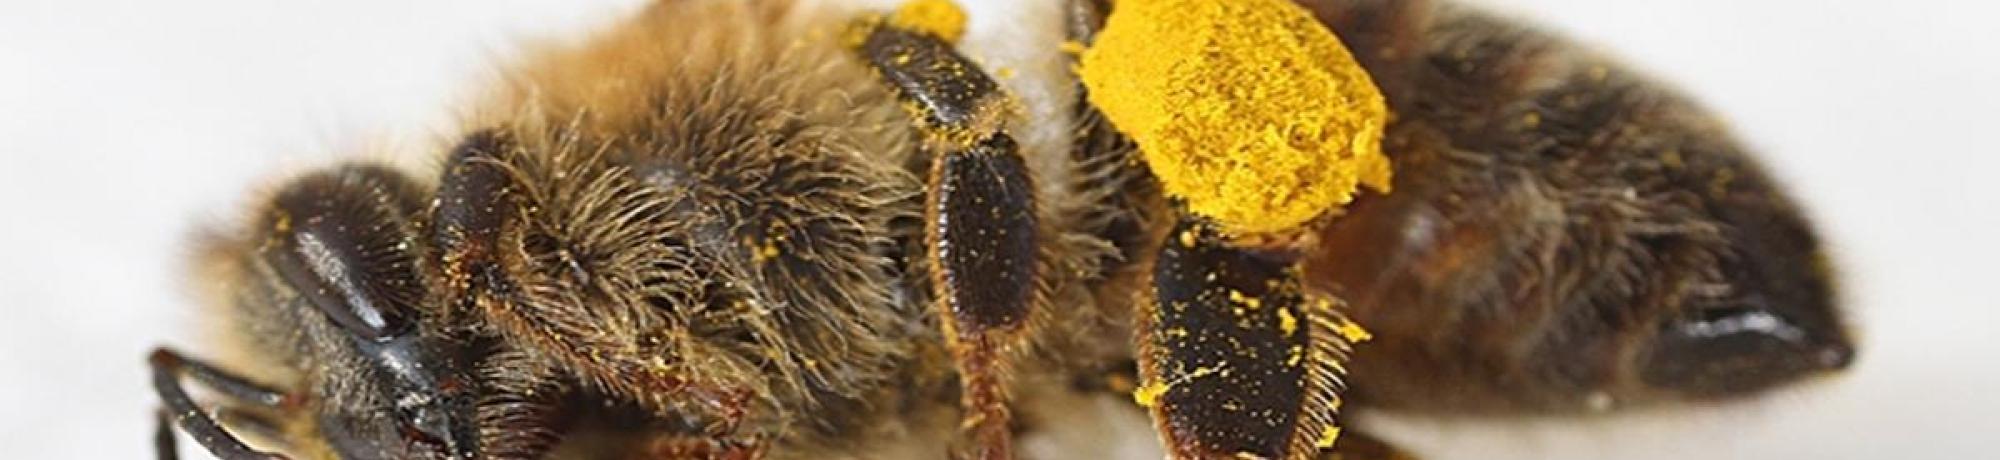 Dead honey bee with corbicula full of pollen